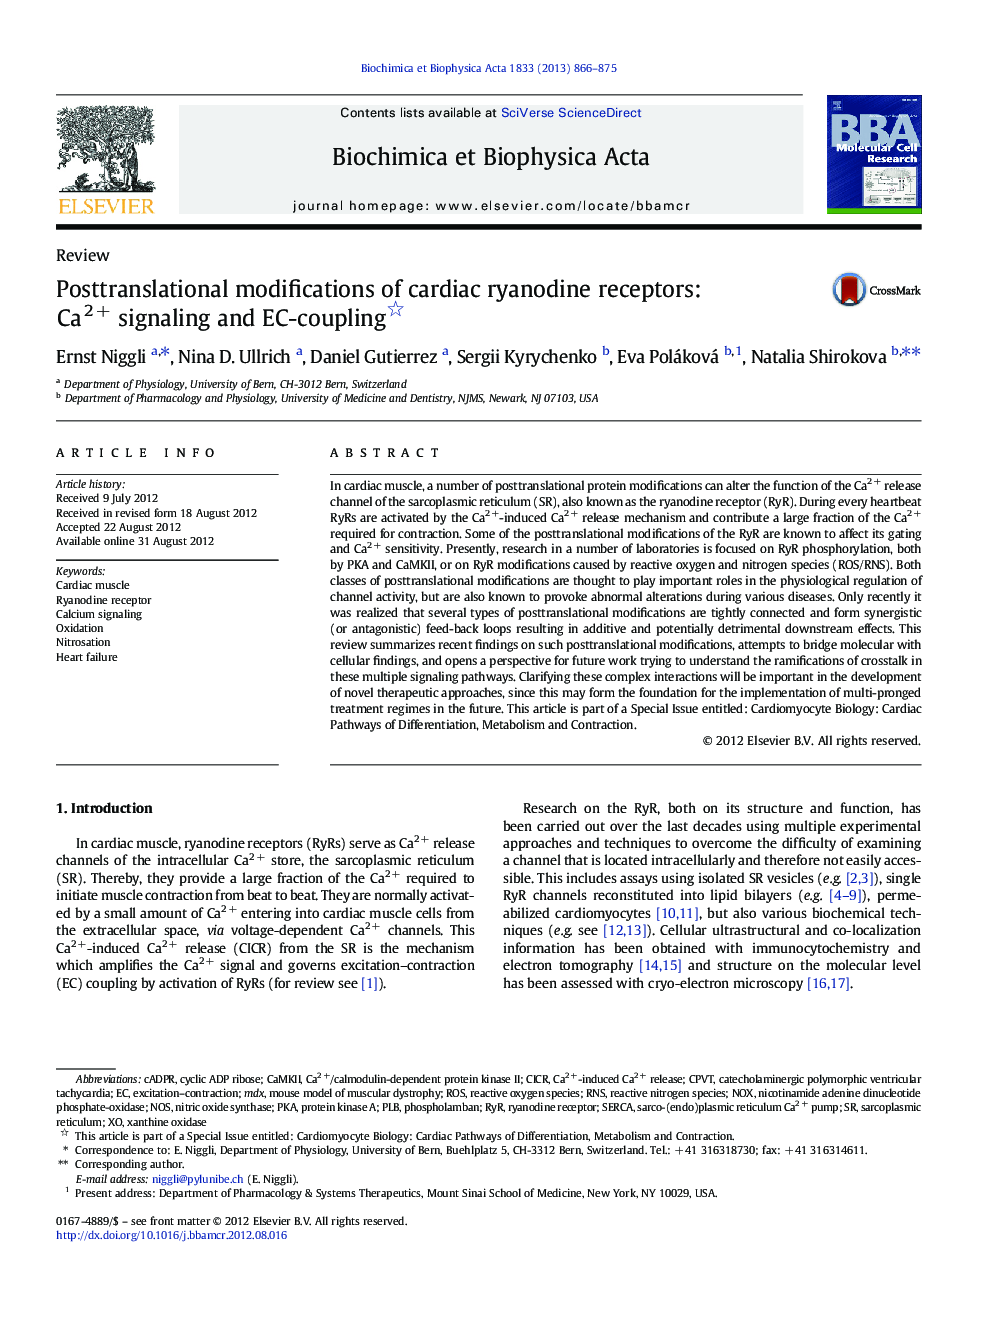 Posttranslational modifications of cardiac ryanodine receptors: Ca2 + signaling and EC-coupling 